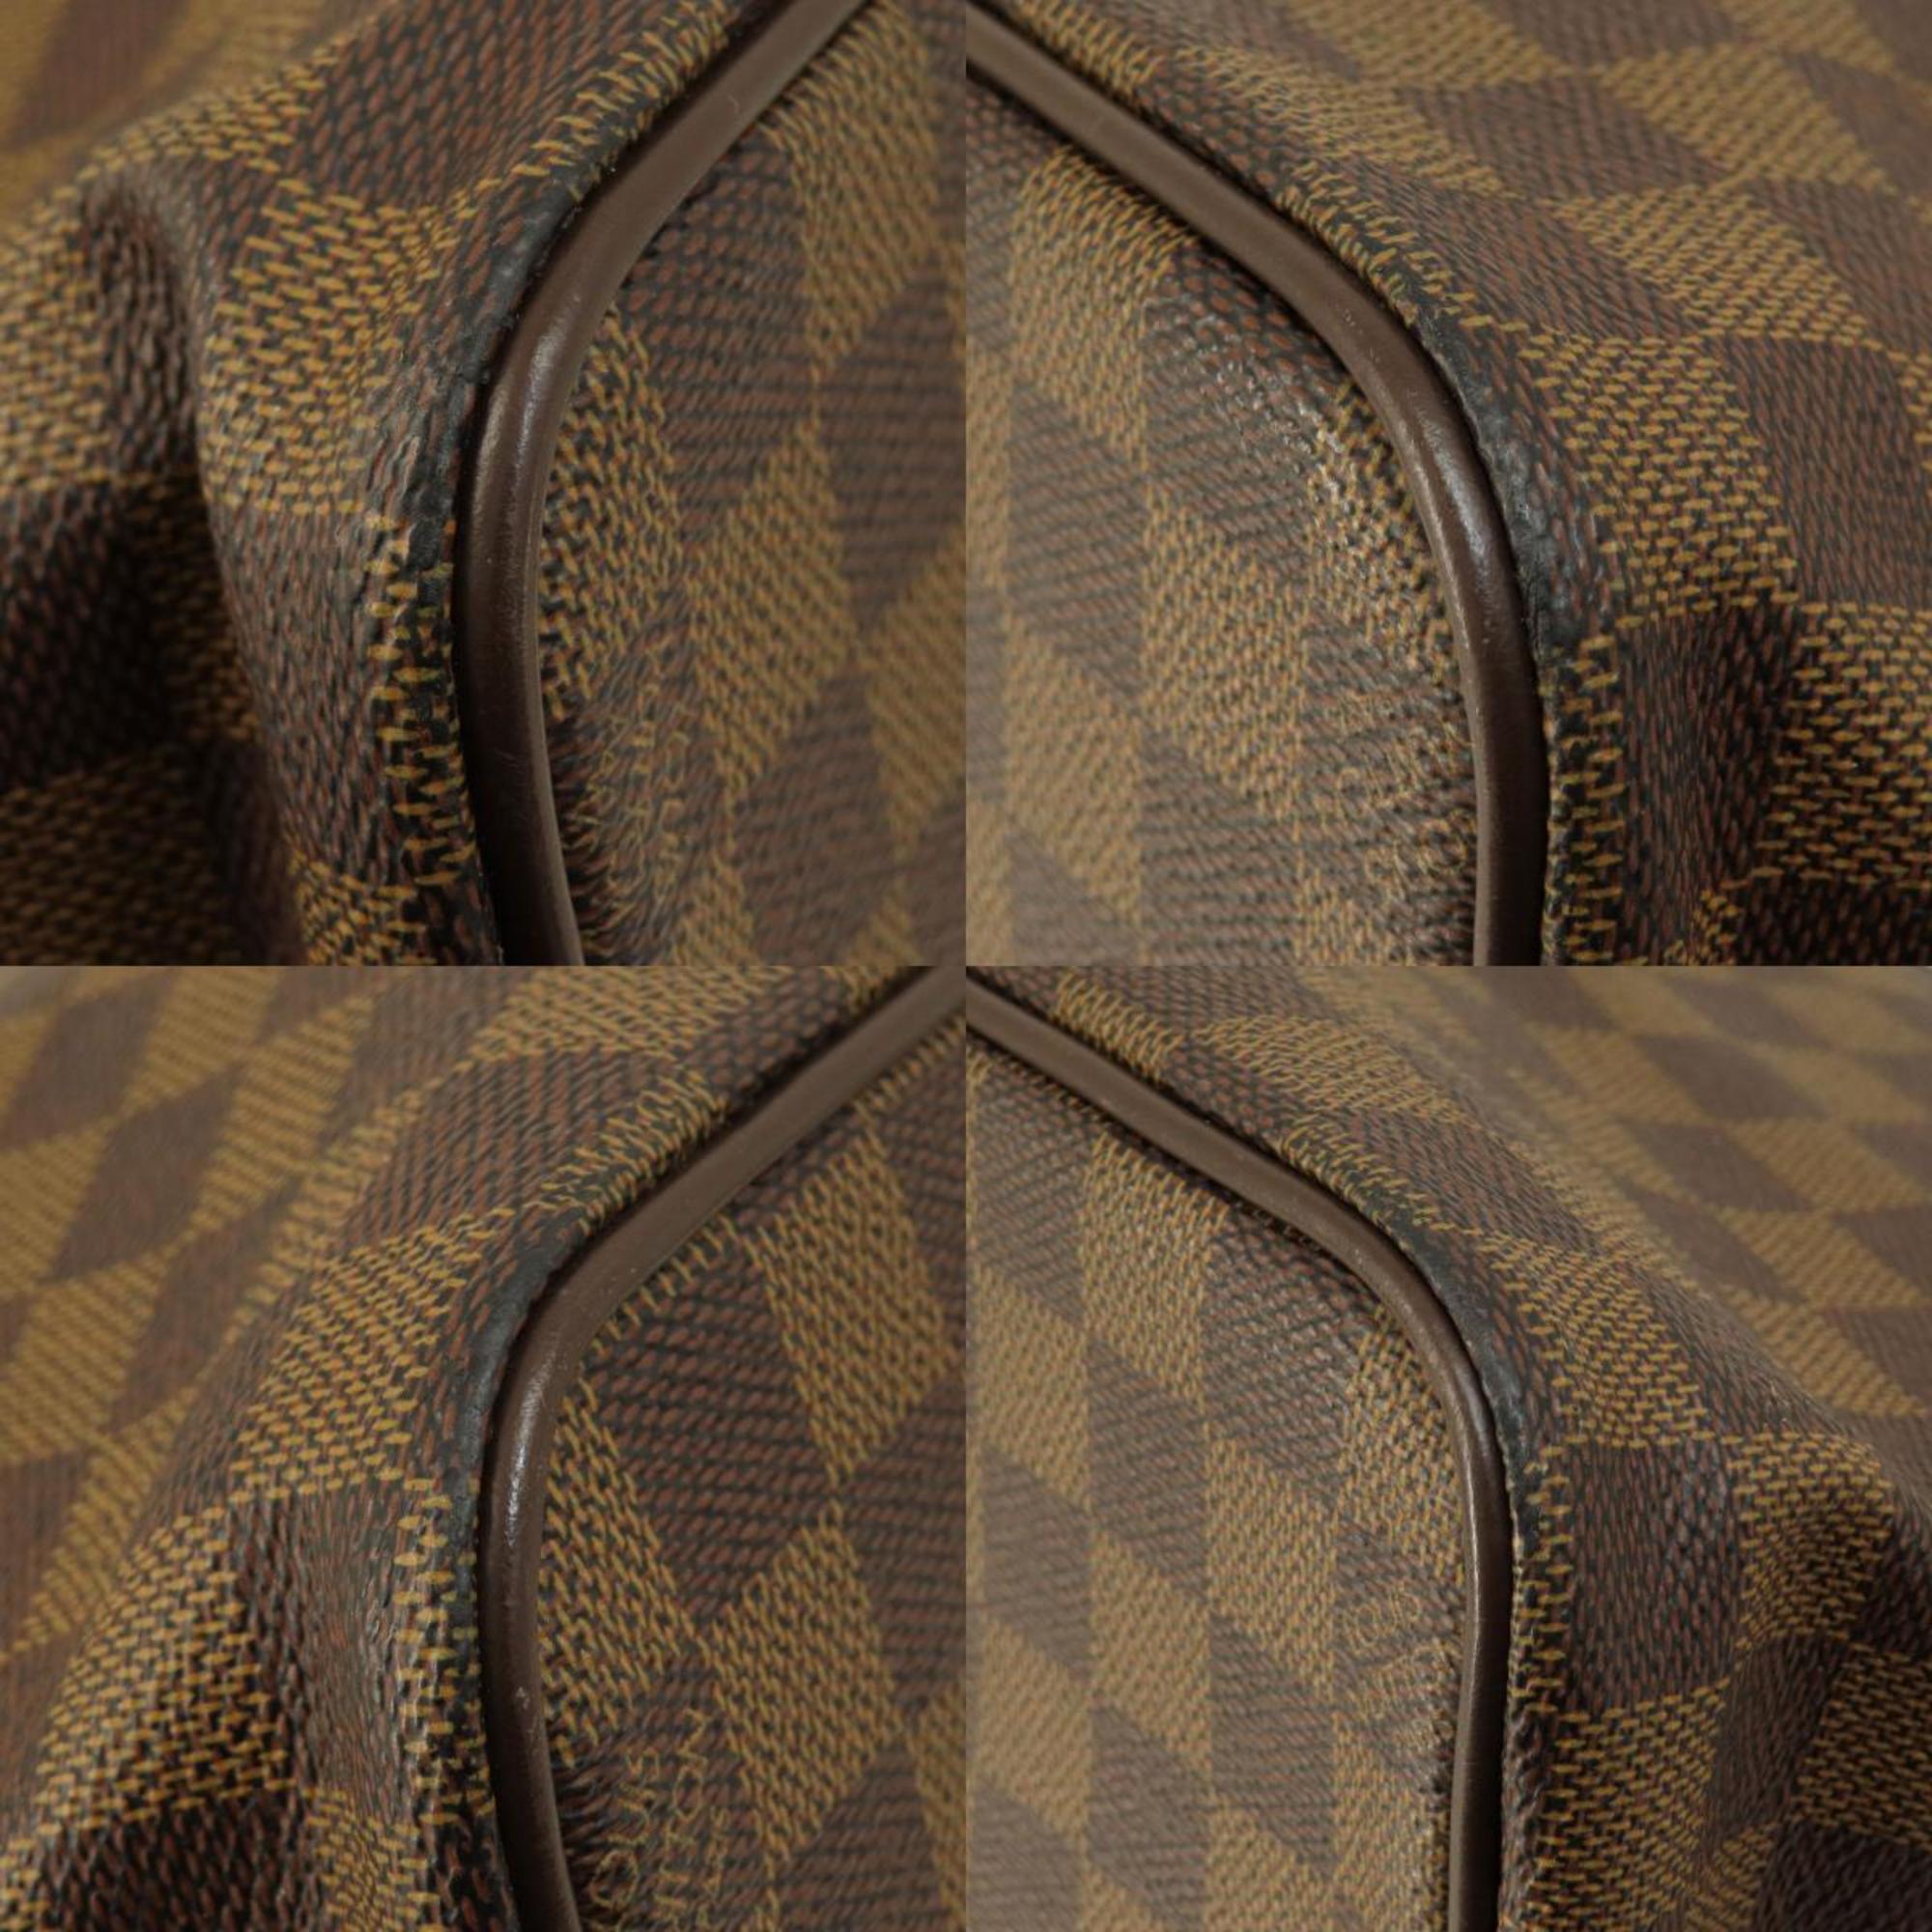 Louis Vuitton N51181 Saleya GM Damier Ebene Tote Bag Canvas Women's LOUIS VUITTON